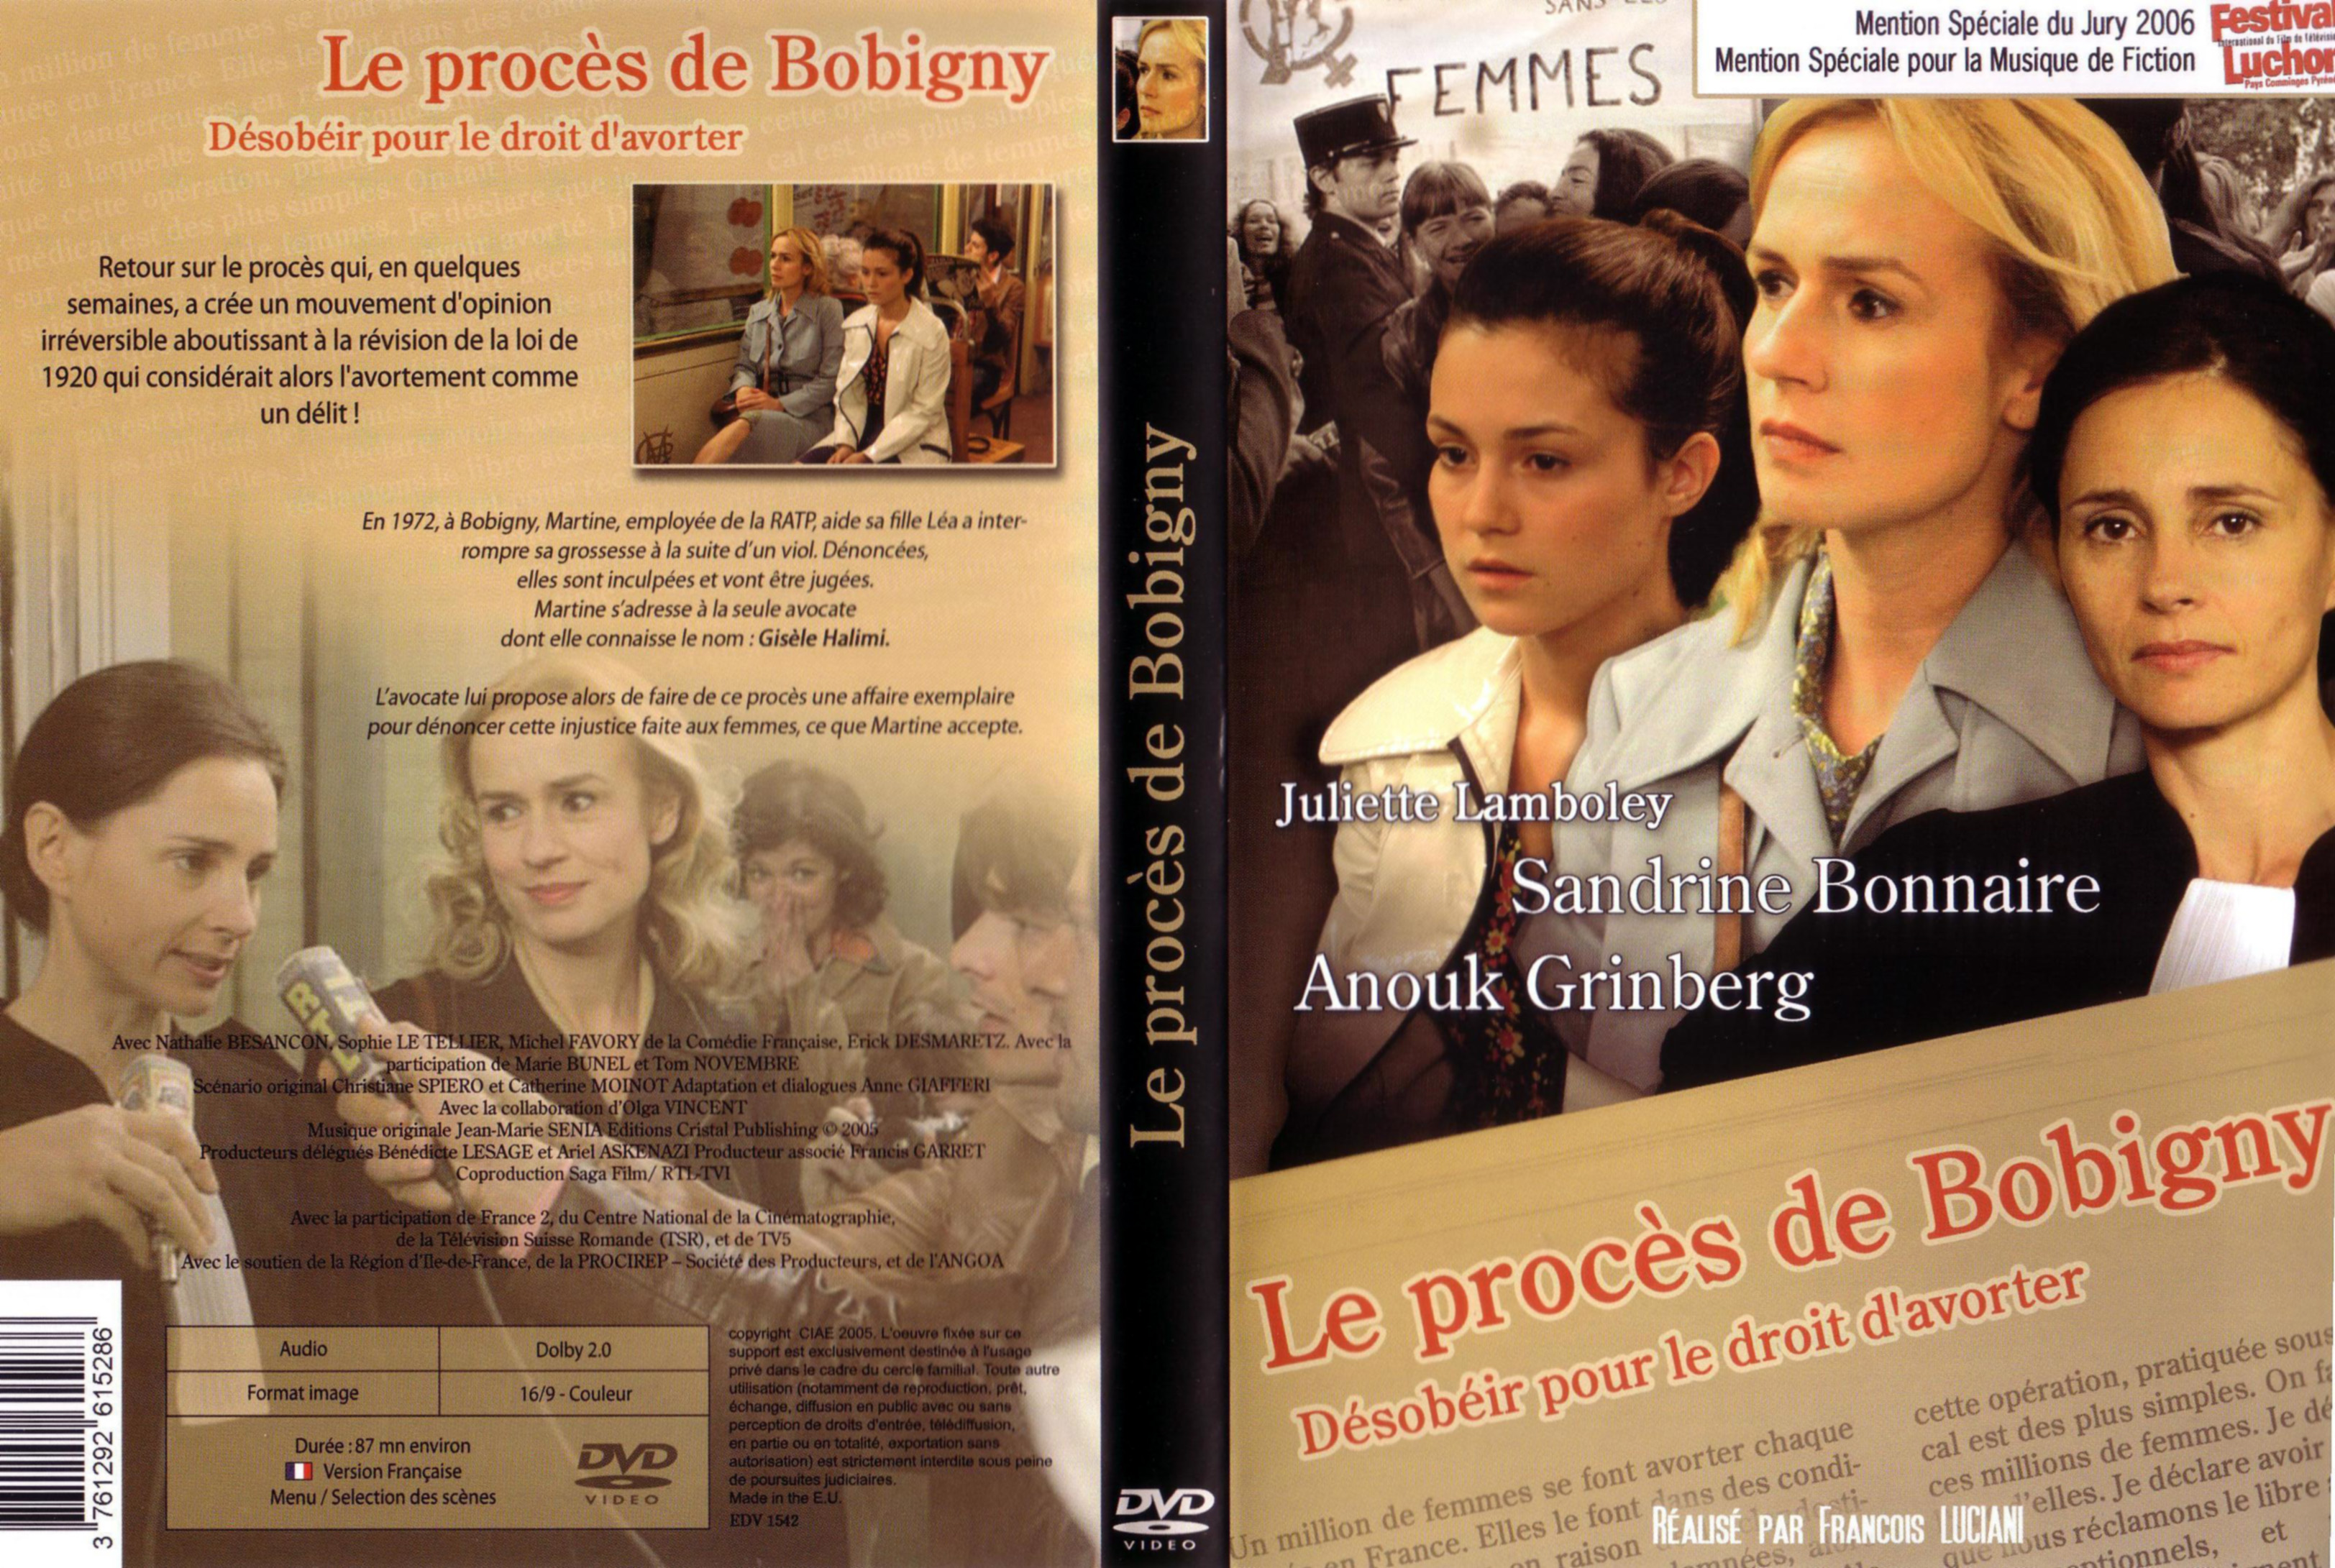 Jaquette DVD Le procs de Bobigny